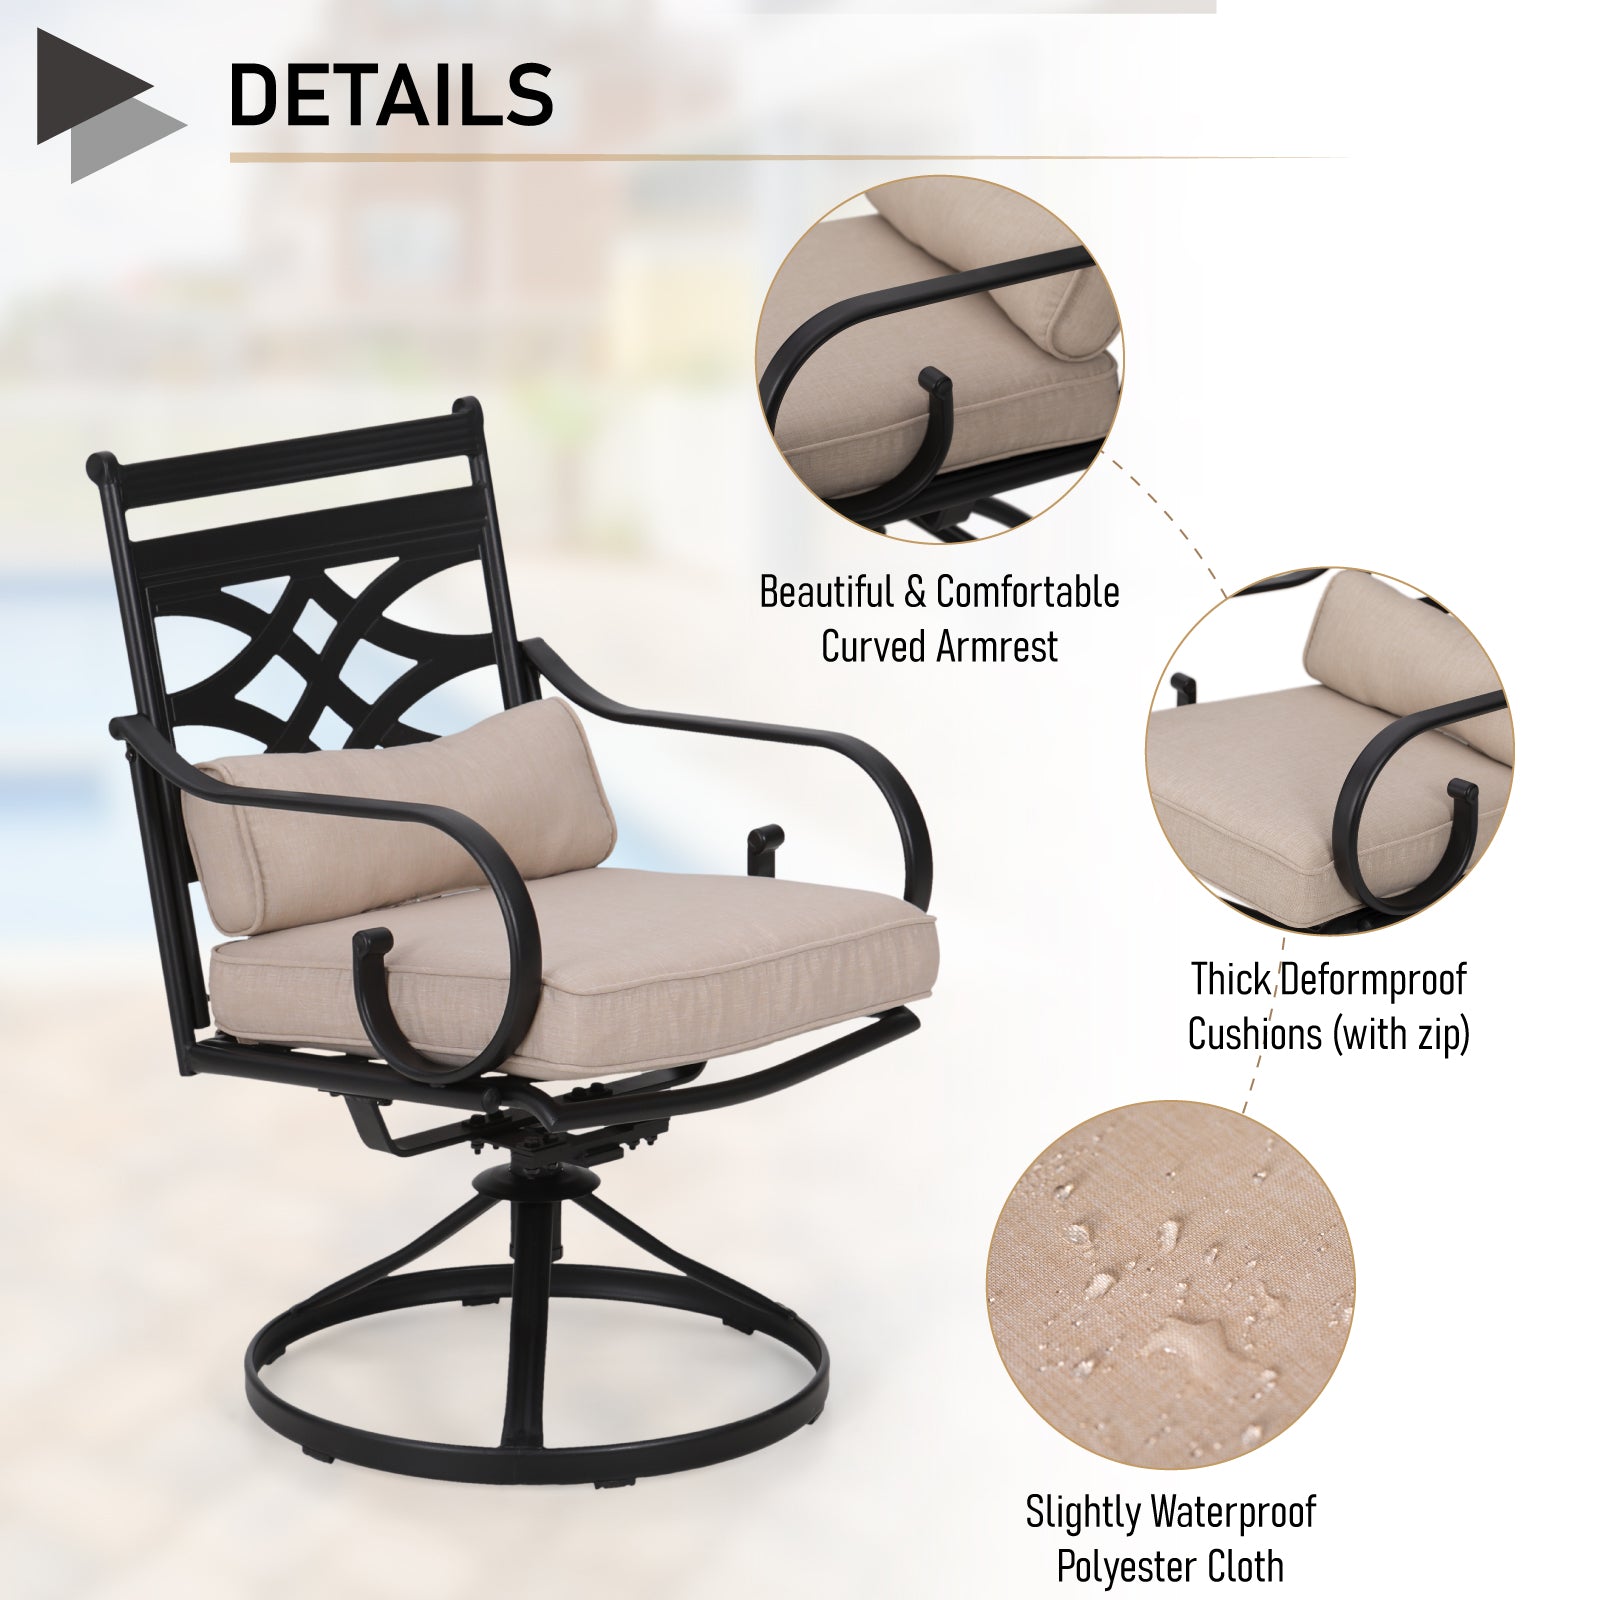 MFSTUDIO 5-Piece Patio Dining Set Teak-grain Table Cast-iron Pattern Swivel Chairs